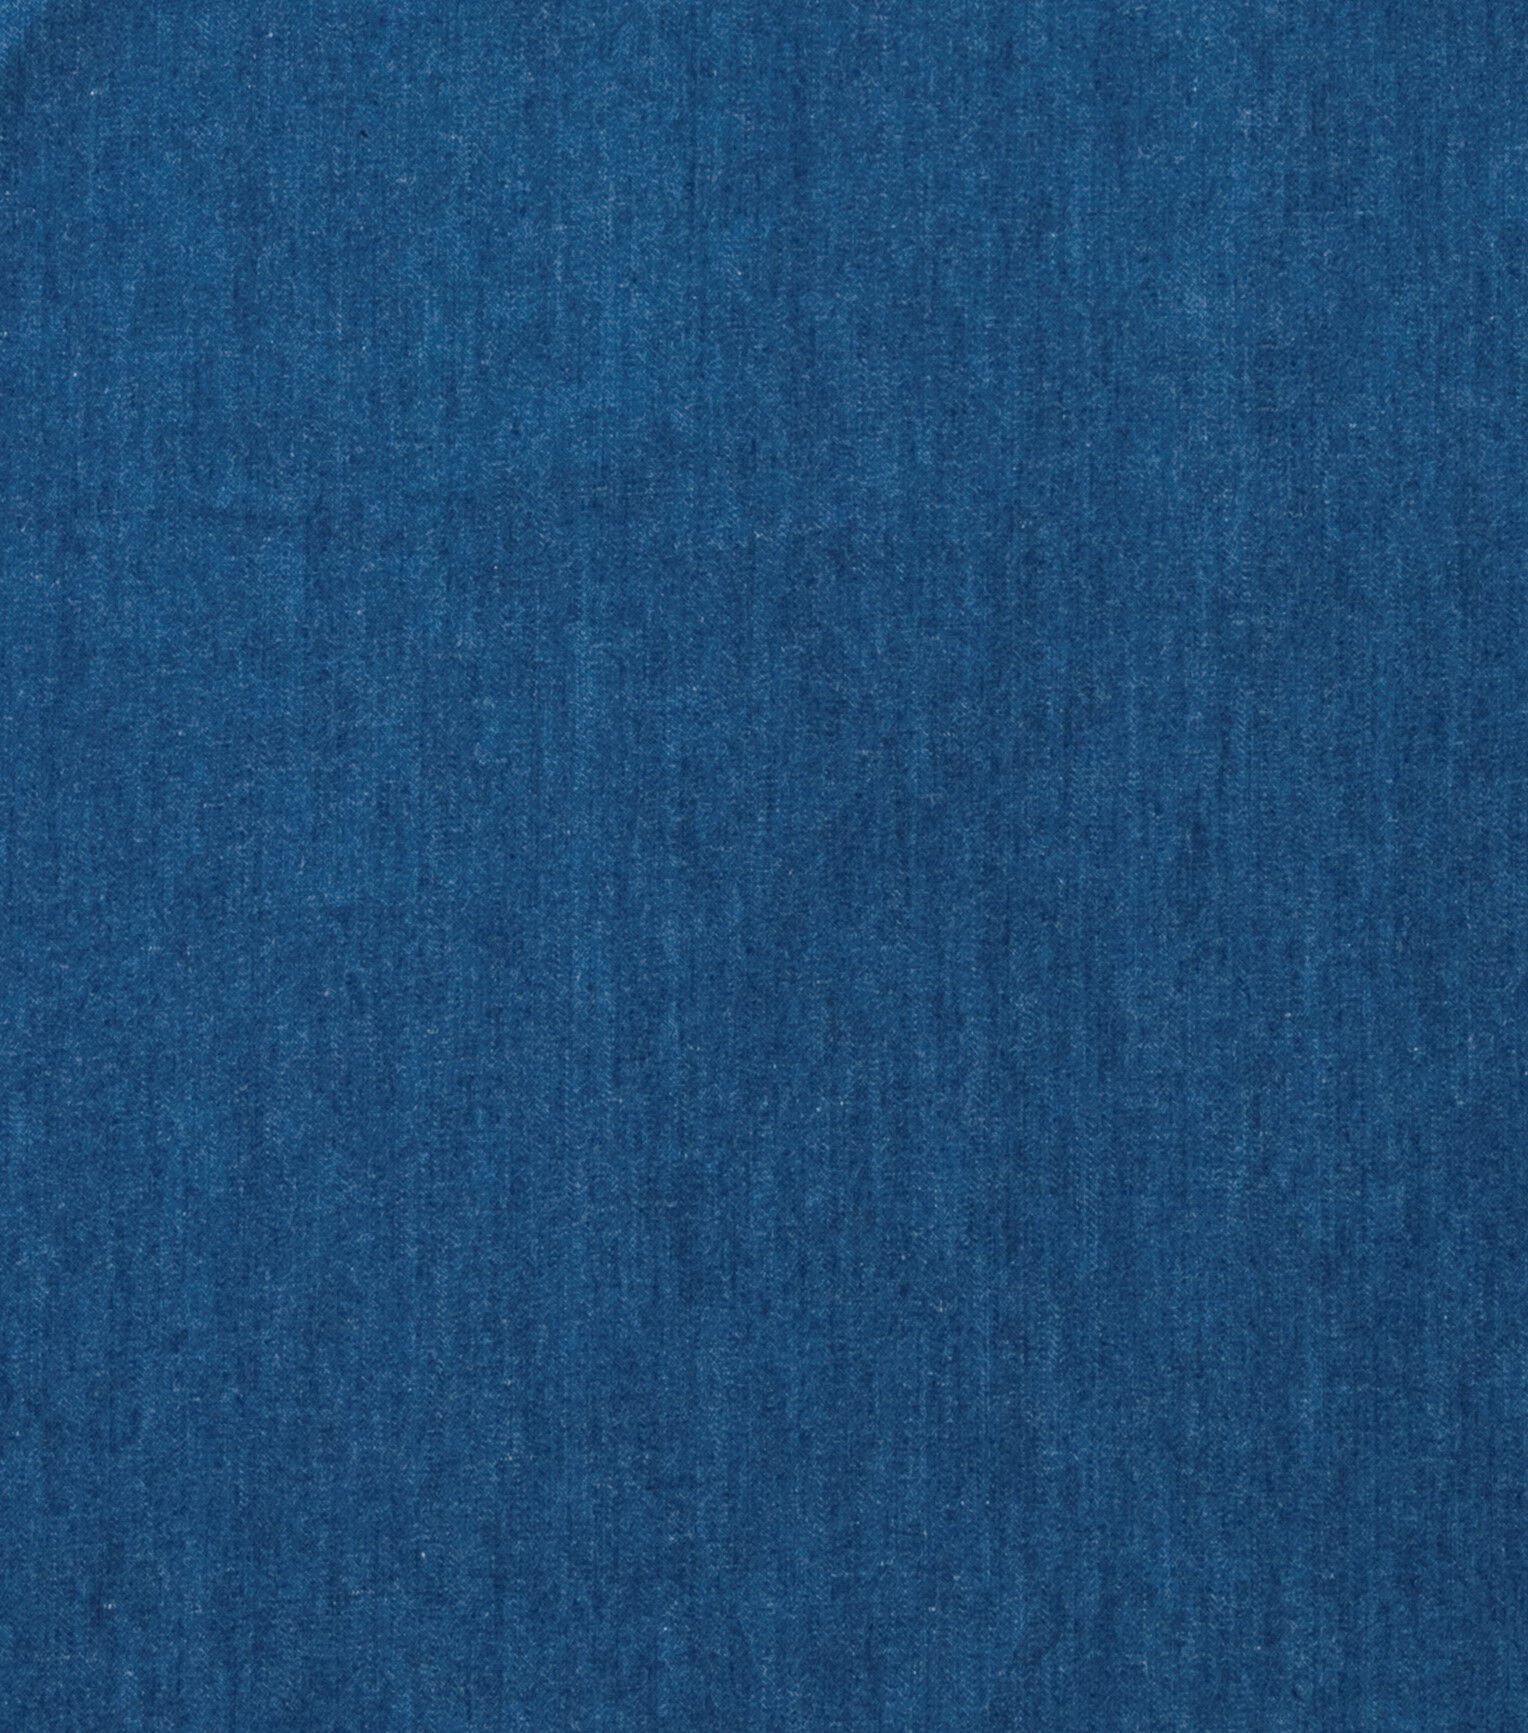 Light Blue denim fabric close up photography background, stone wash denim  jeans cloth, denim texture, 25673785 Stock Photo at Vecteezy